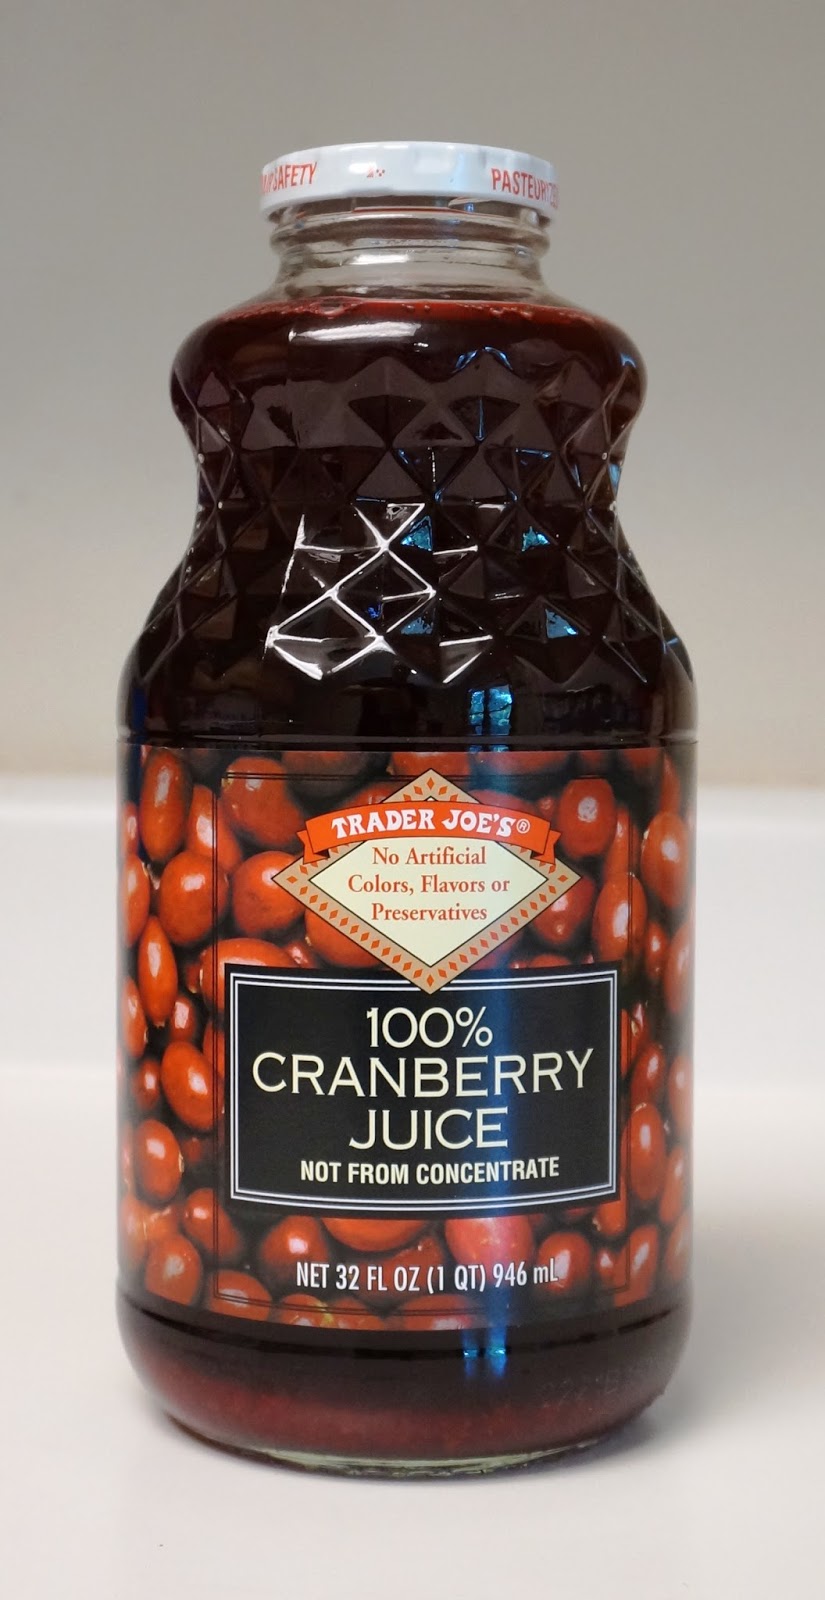 Exploring Trader Joe's: Trader Joe's 100% Cranberry Juice Not From